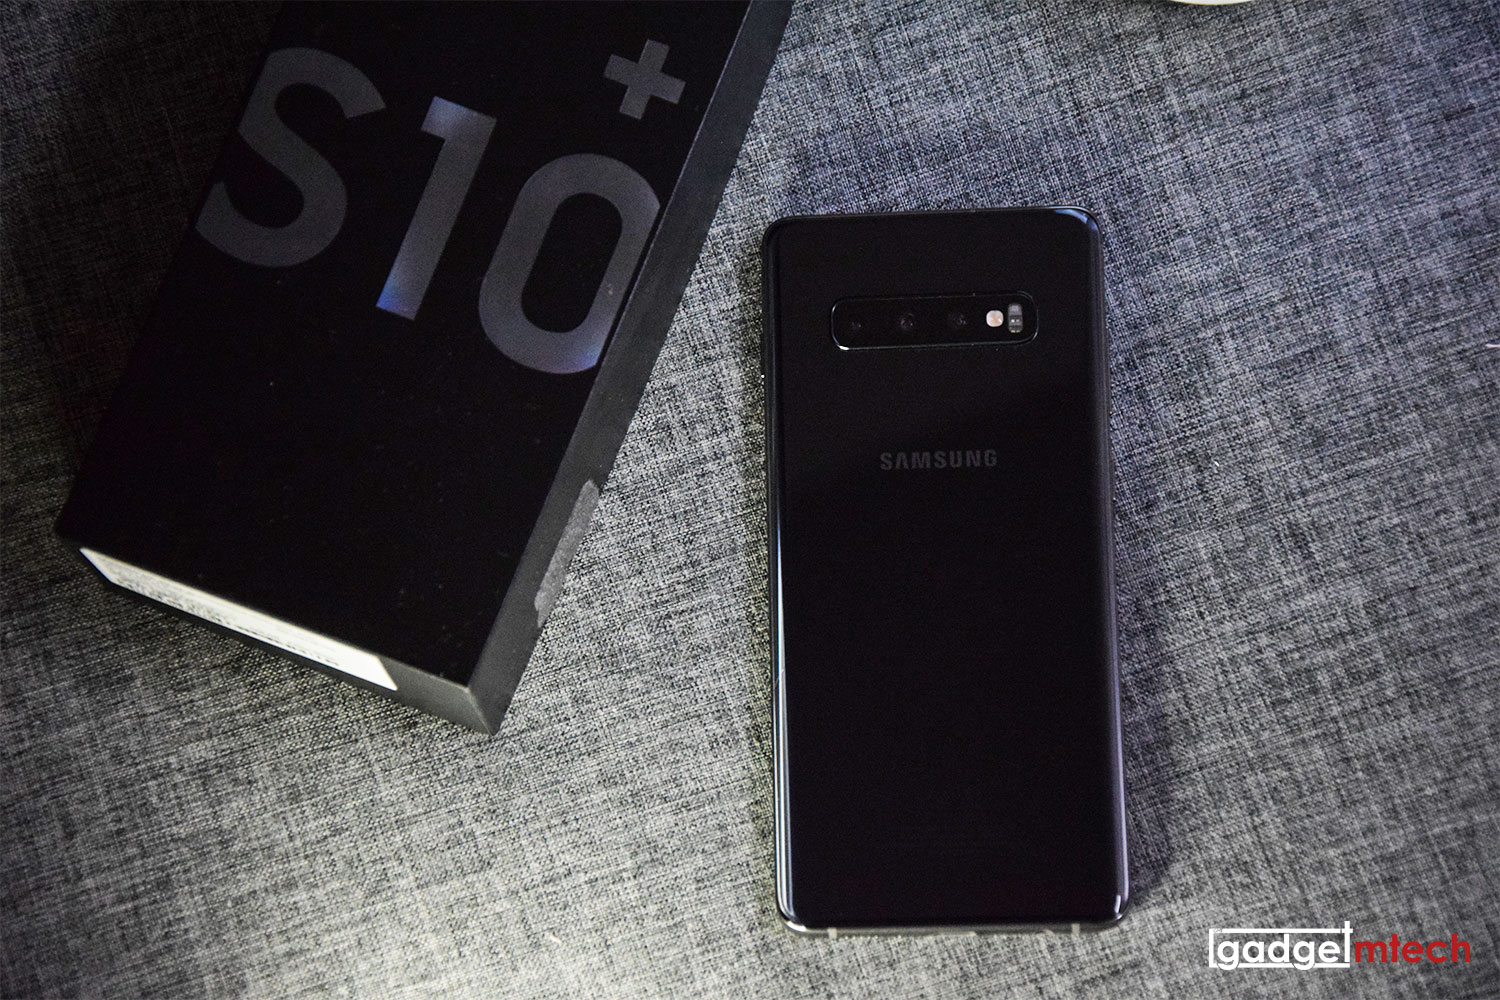 Samsung Galaxy S10+ Review: Breakthrough